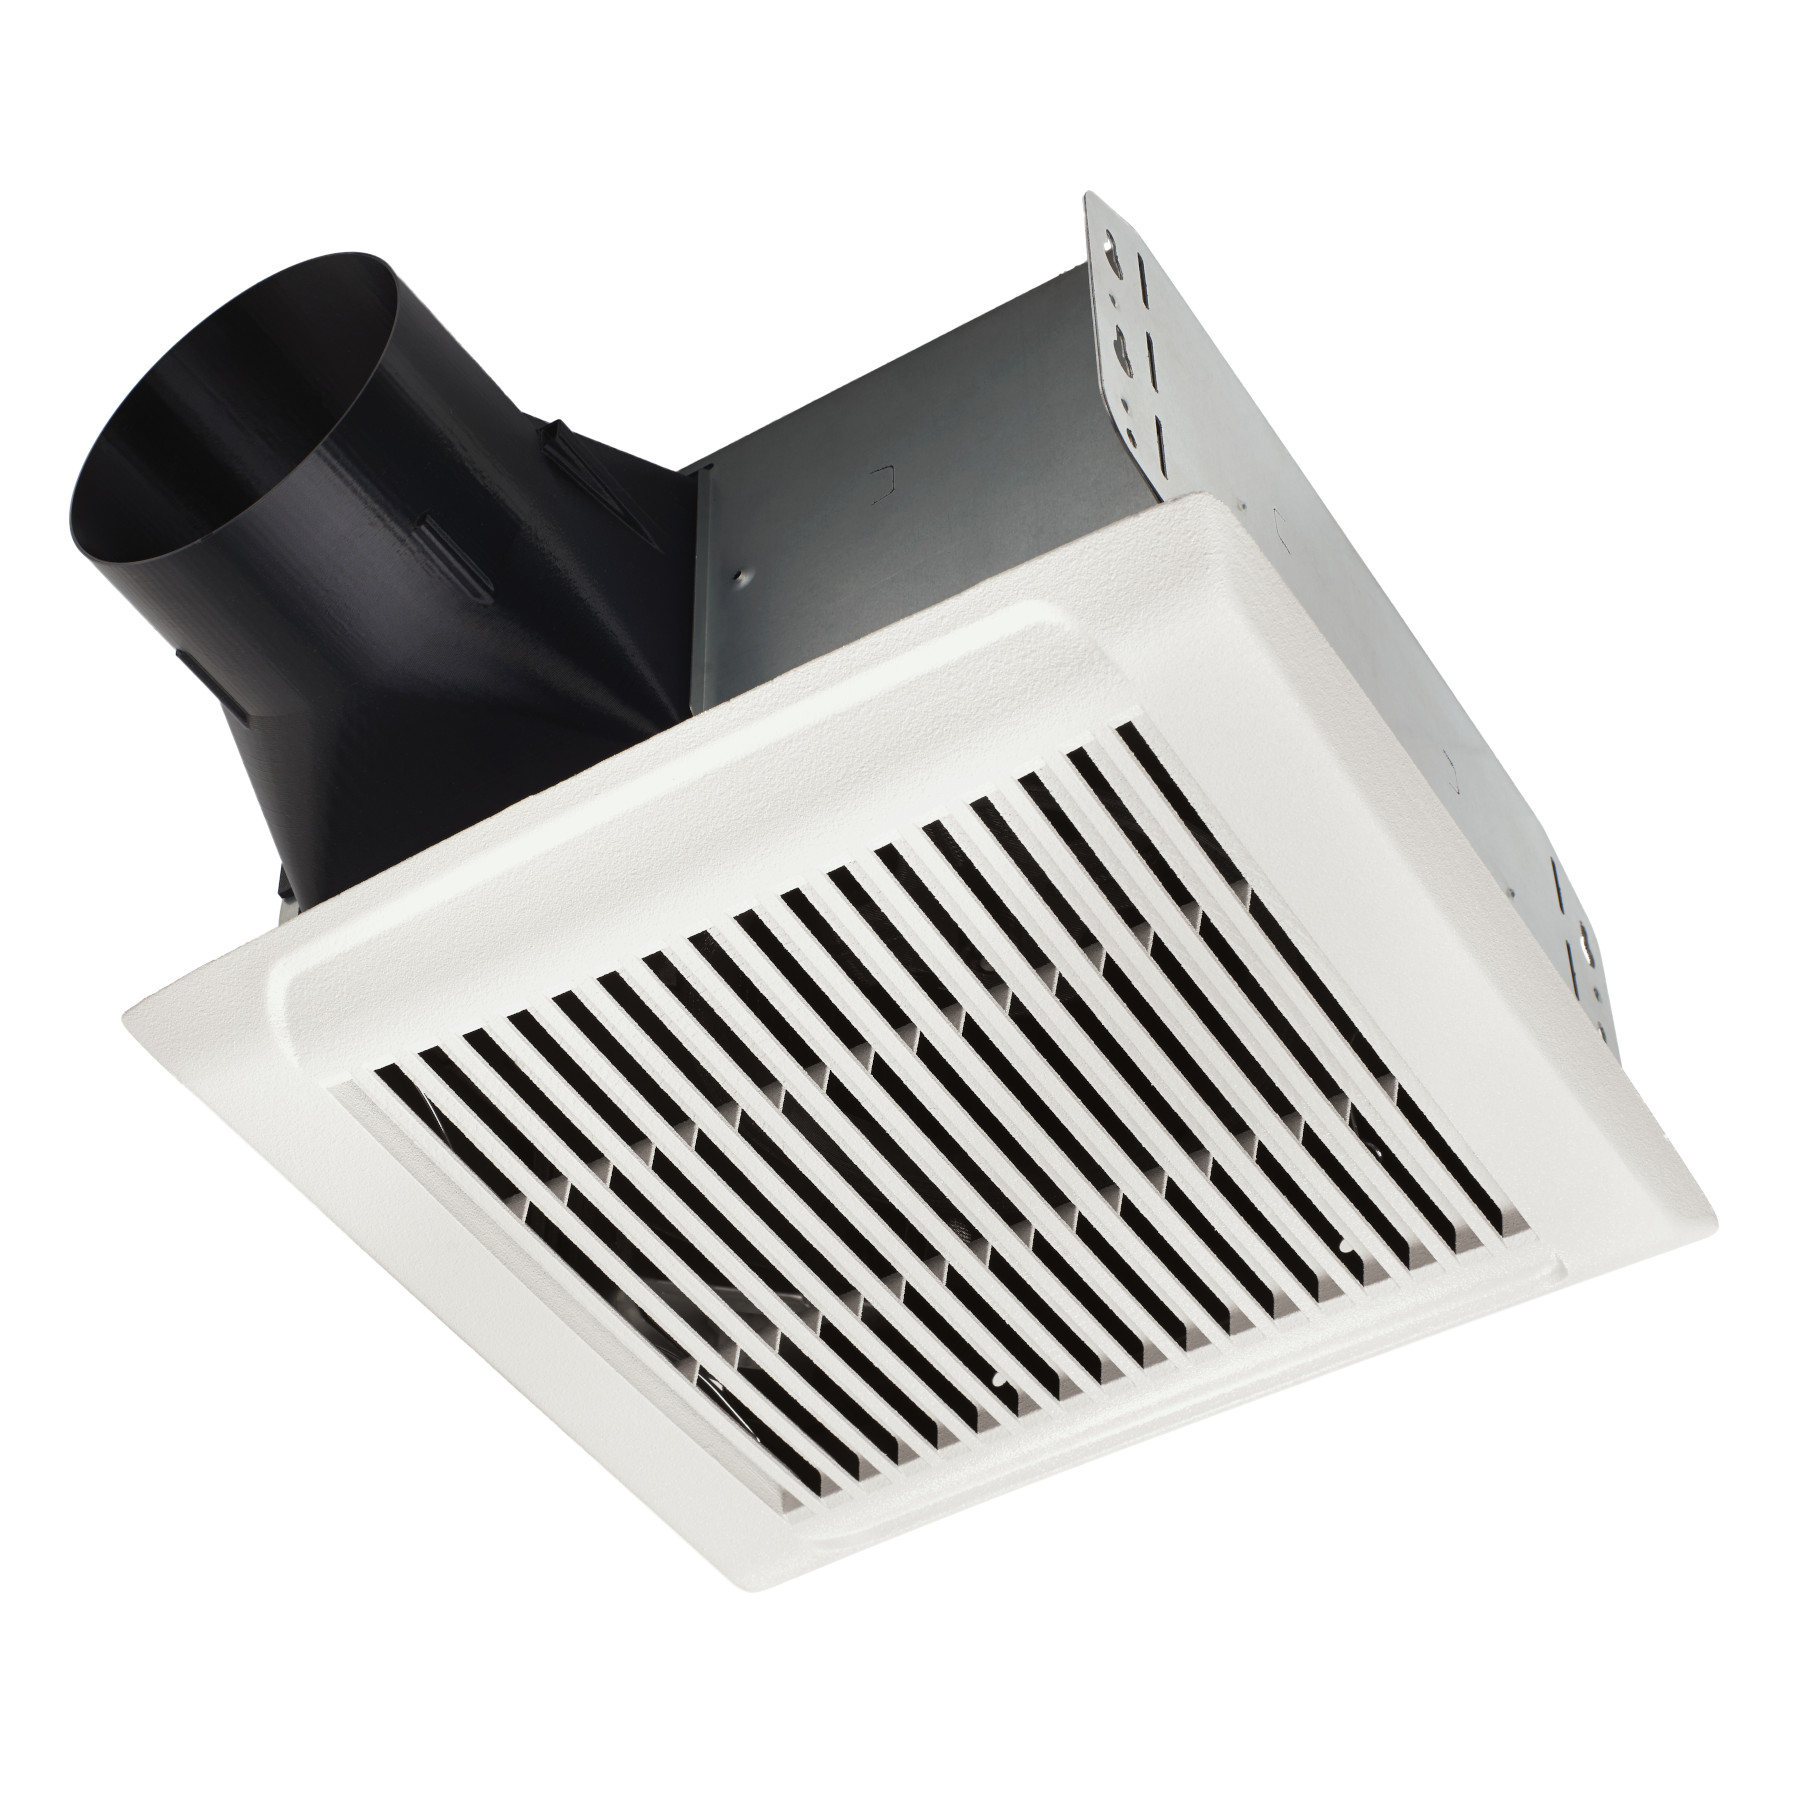 DISCONTINUED: NuTone®110 CFM Ventilation Fan, 3.0 Sones